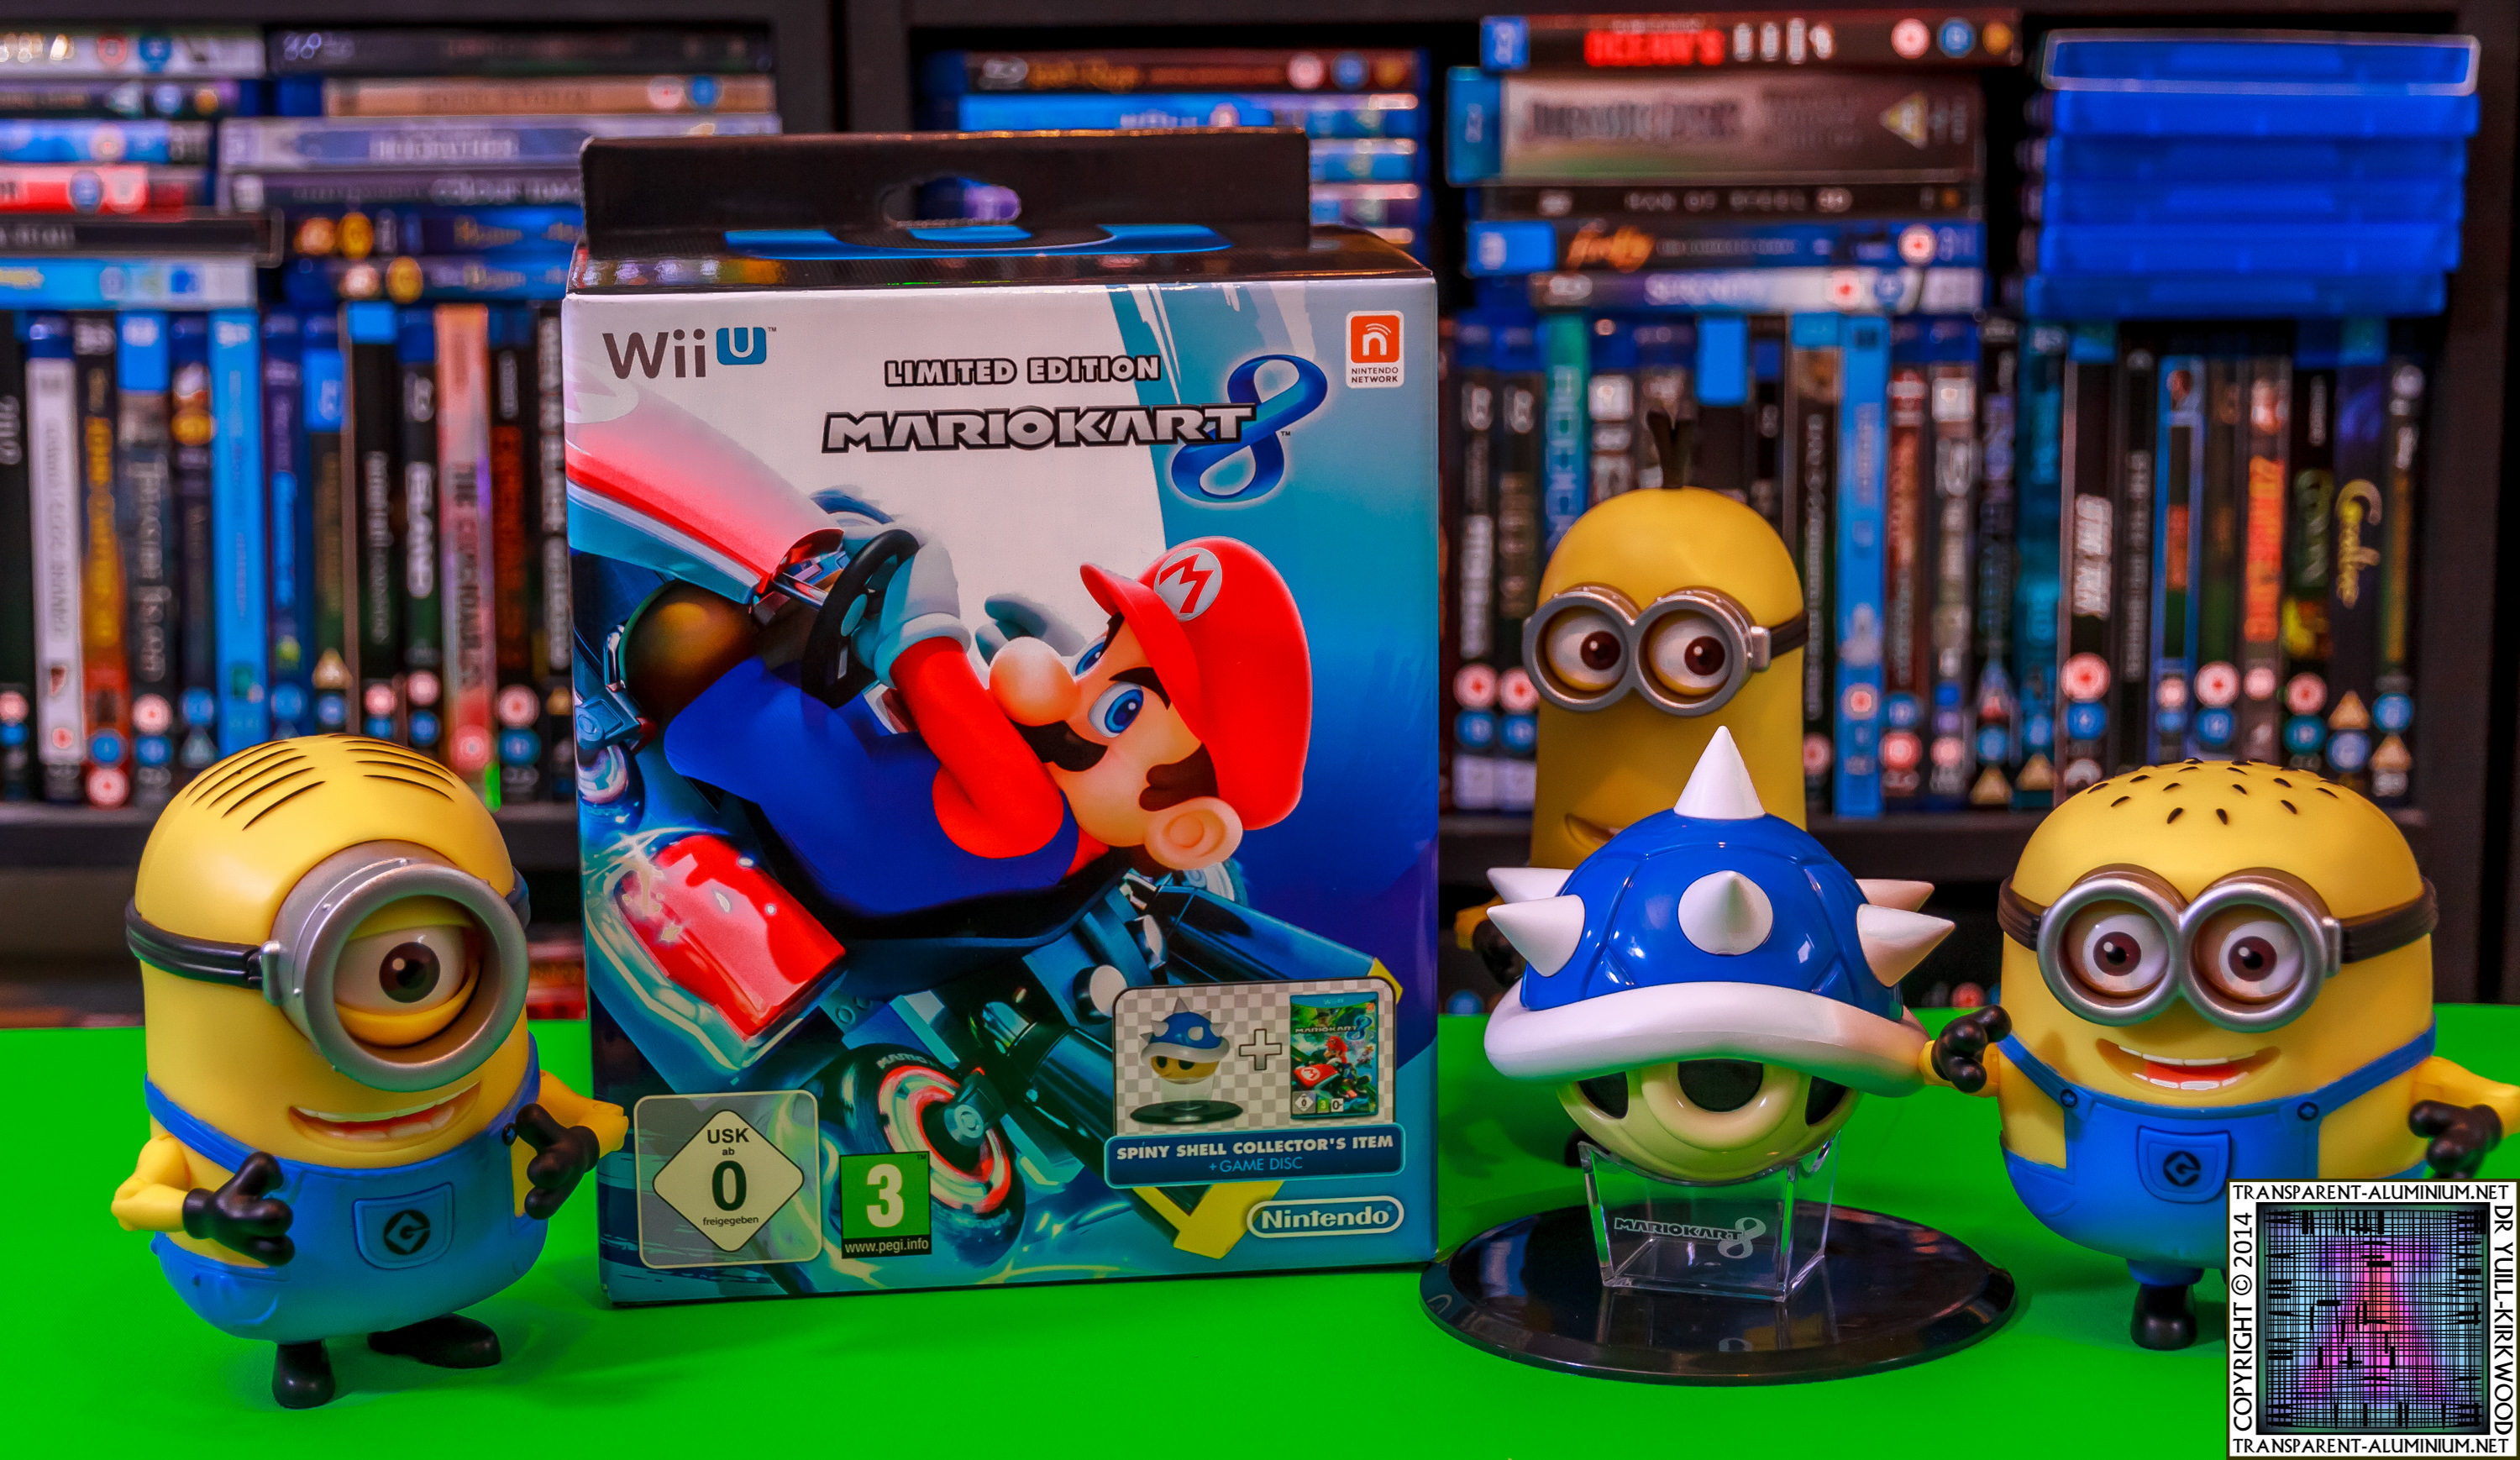 Mario Kart 8 Limited Edition with Blue Shell Figurine Wii U